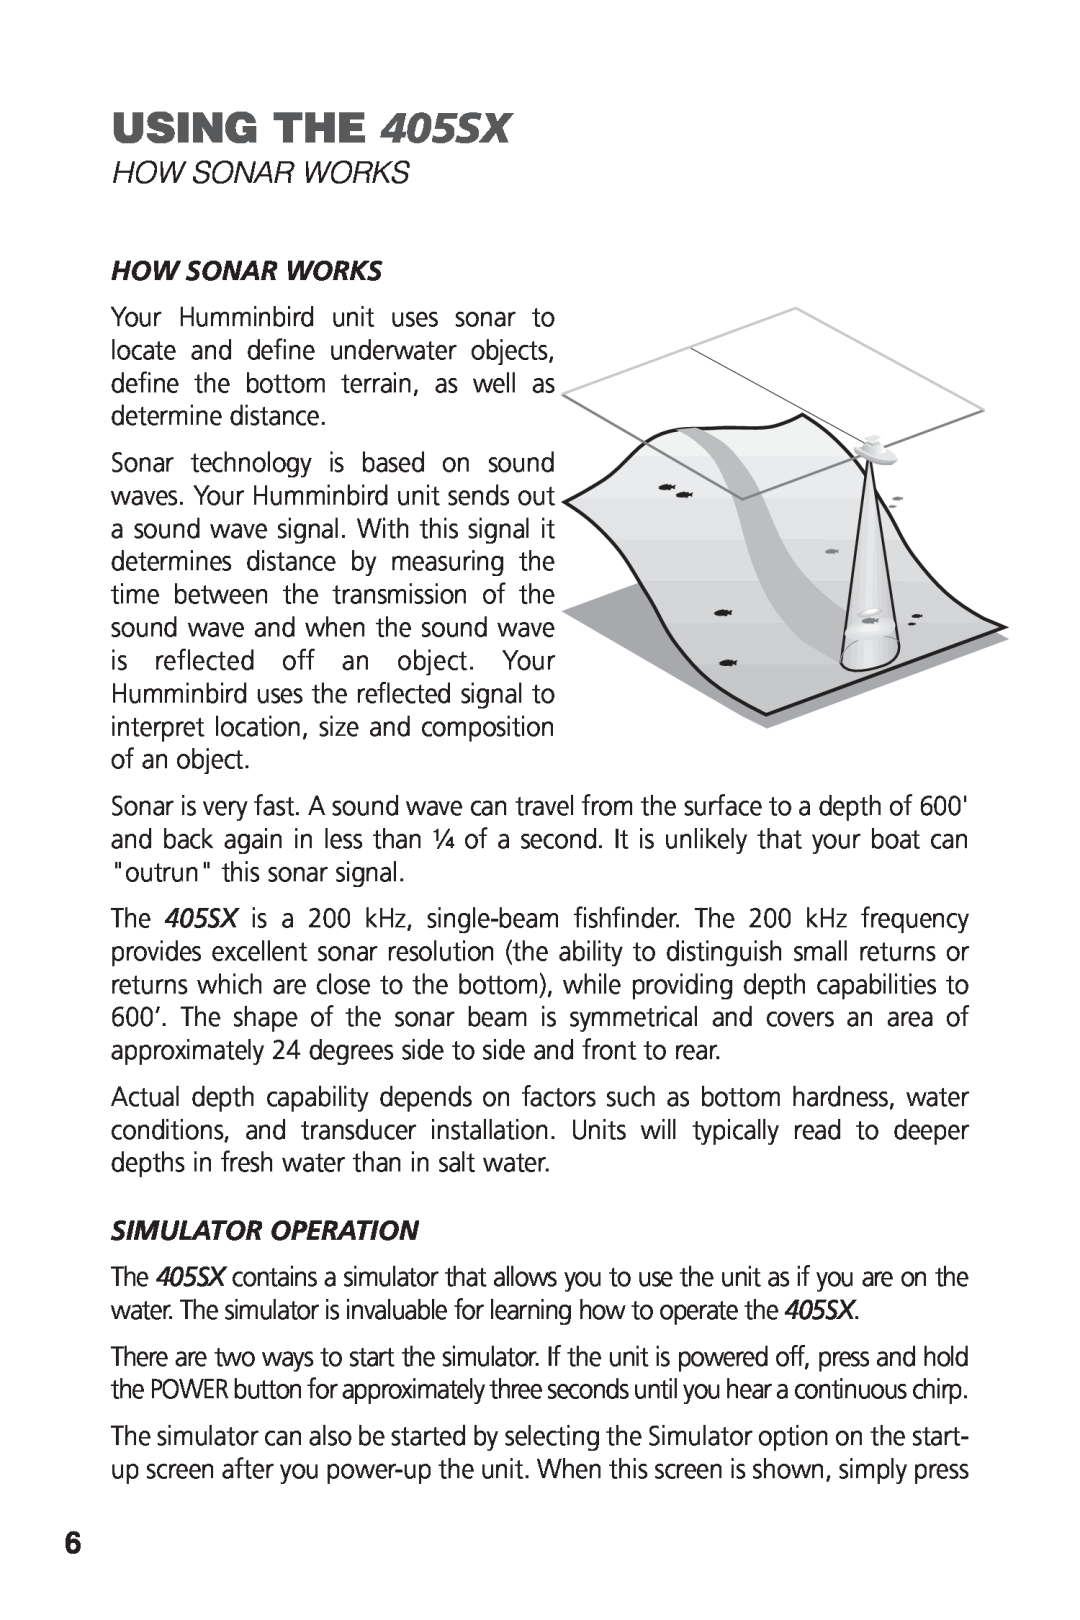 Humminbird manual USING THE 405SX, How Sonar Works, Simulator Operation 